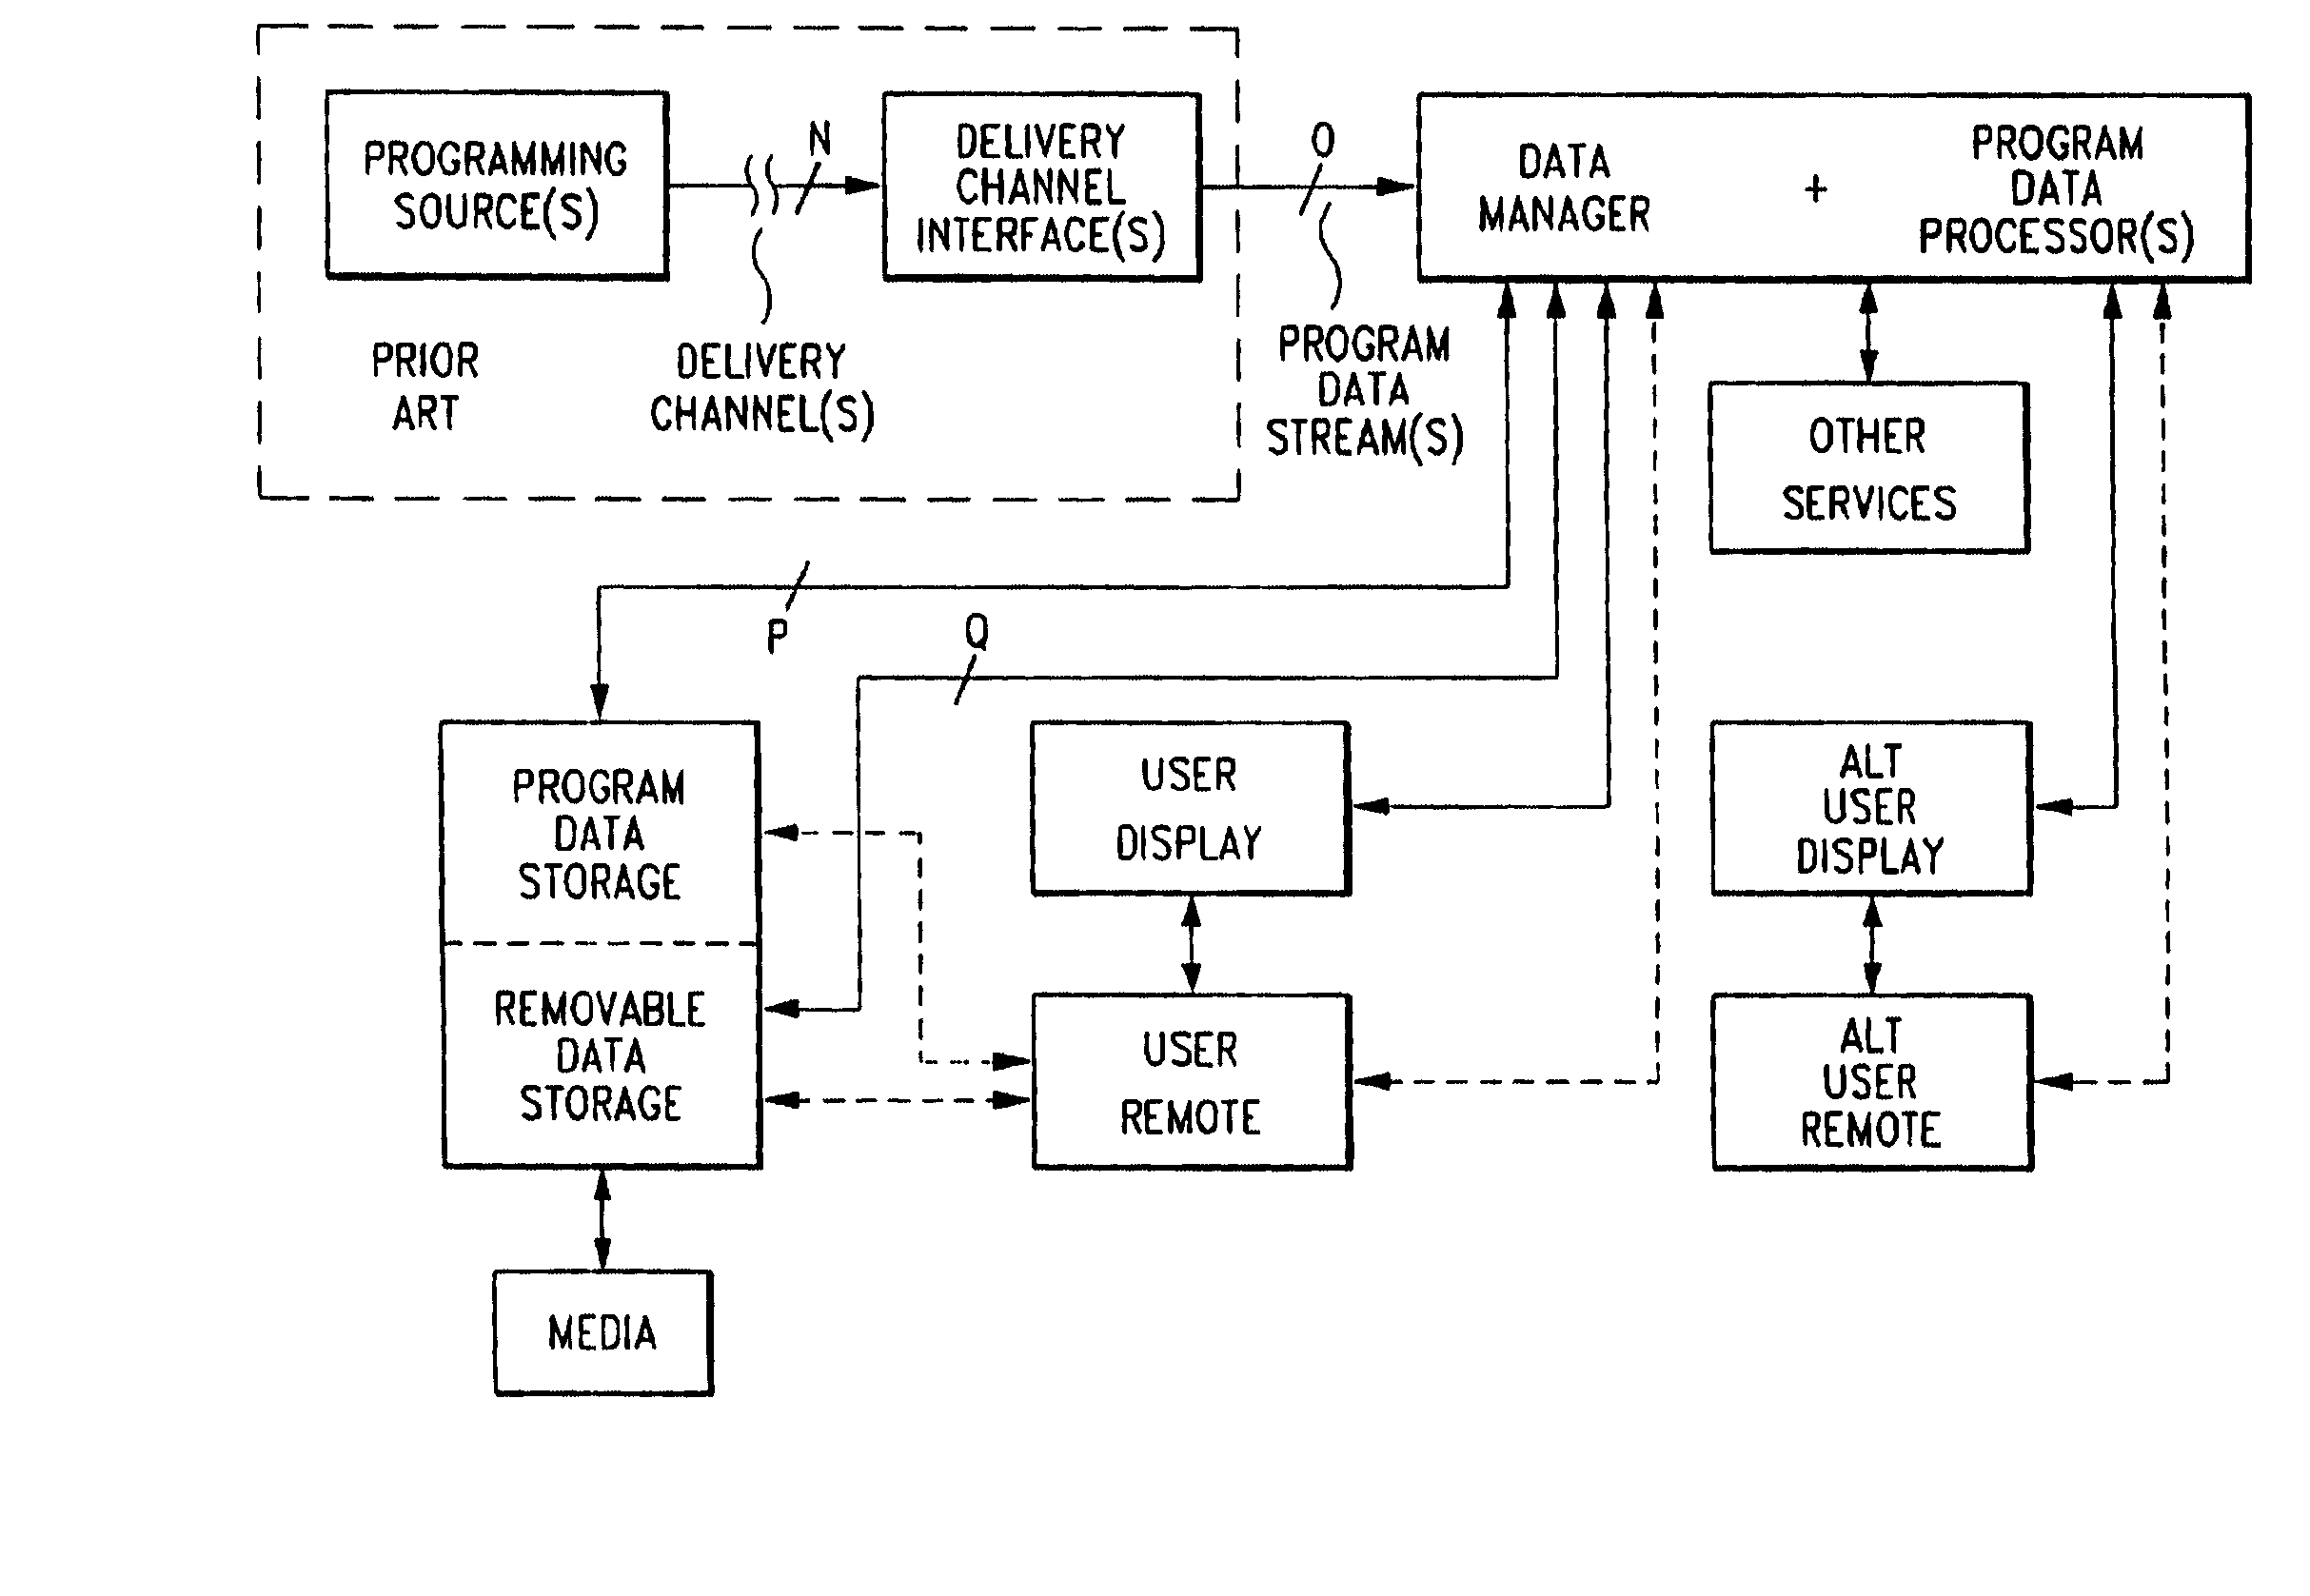 Program viewing apparatus and method